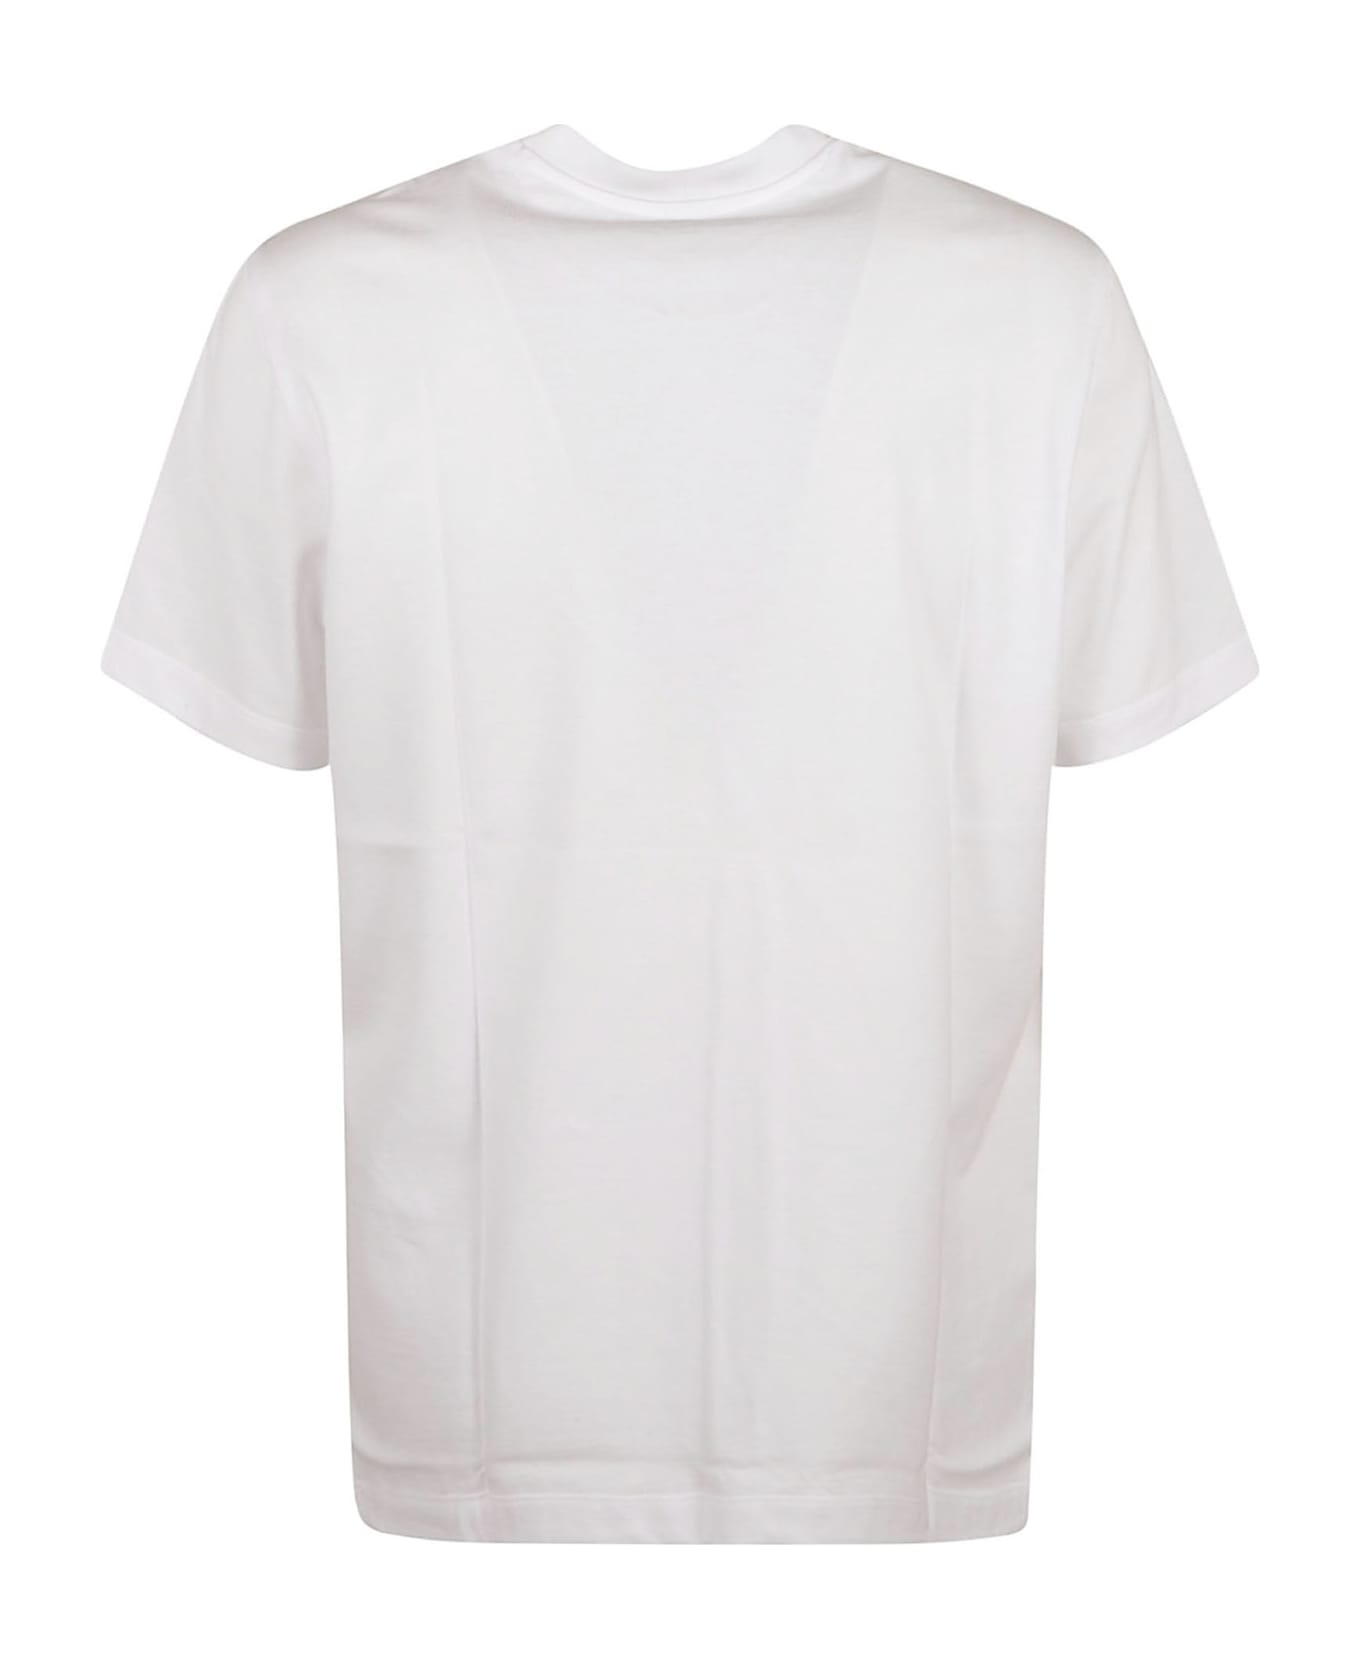 Ferragamo Logo Patch T-shirt - White/Black